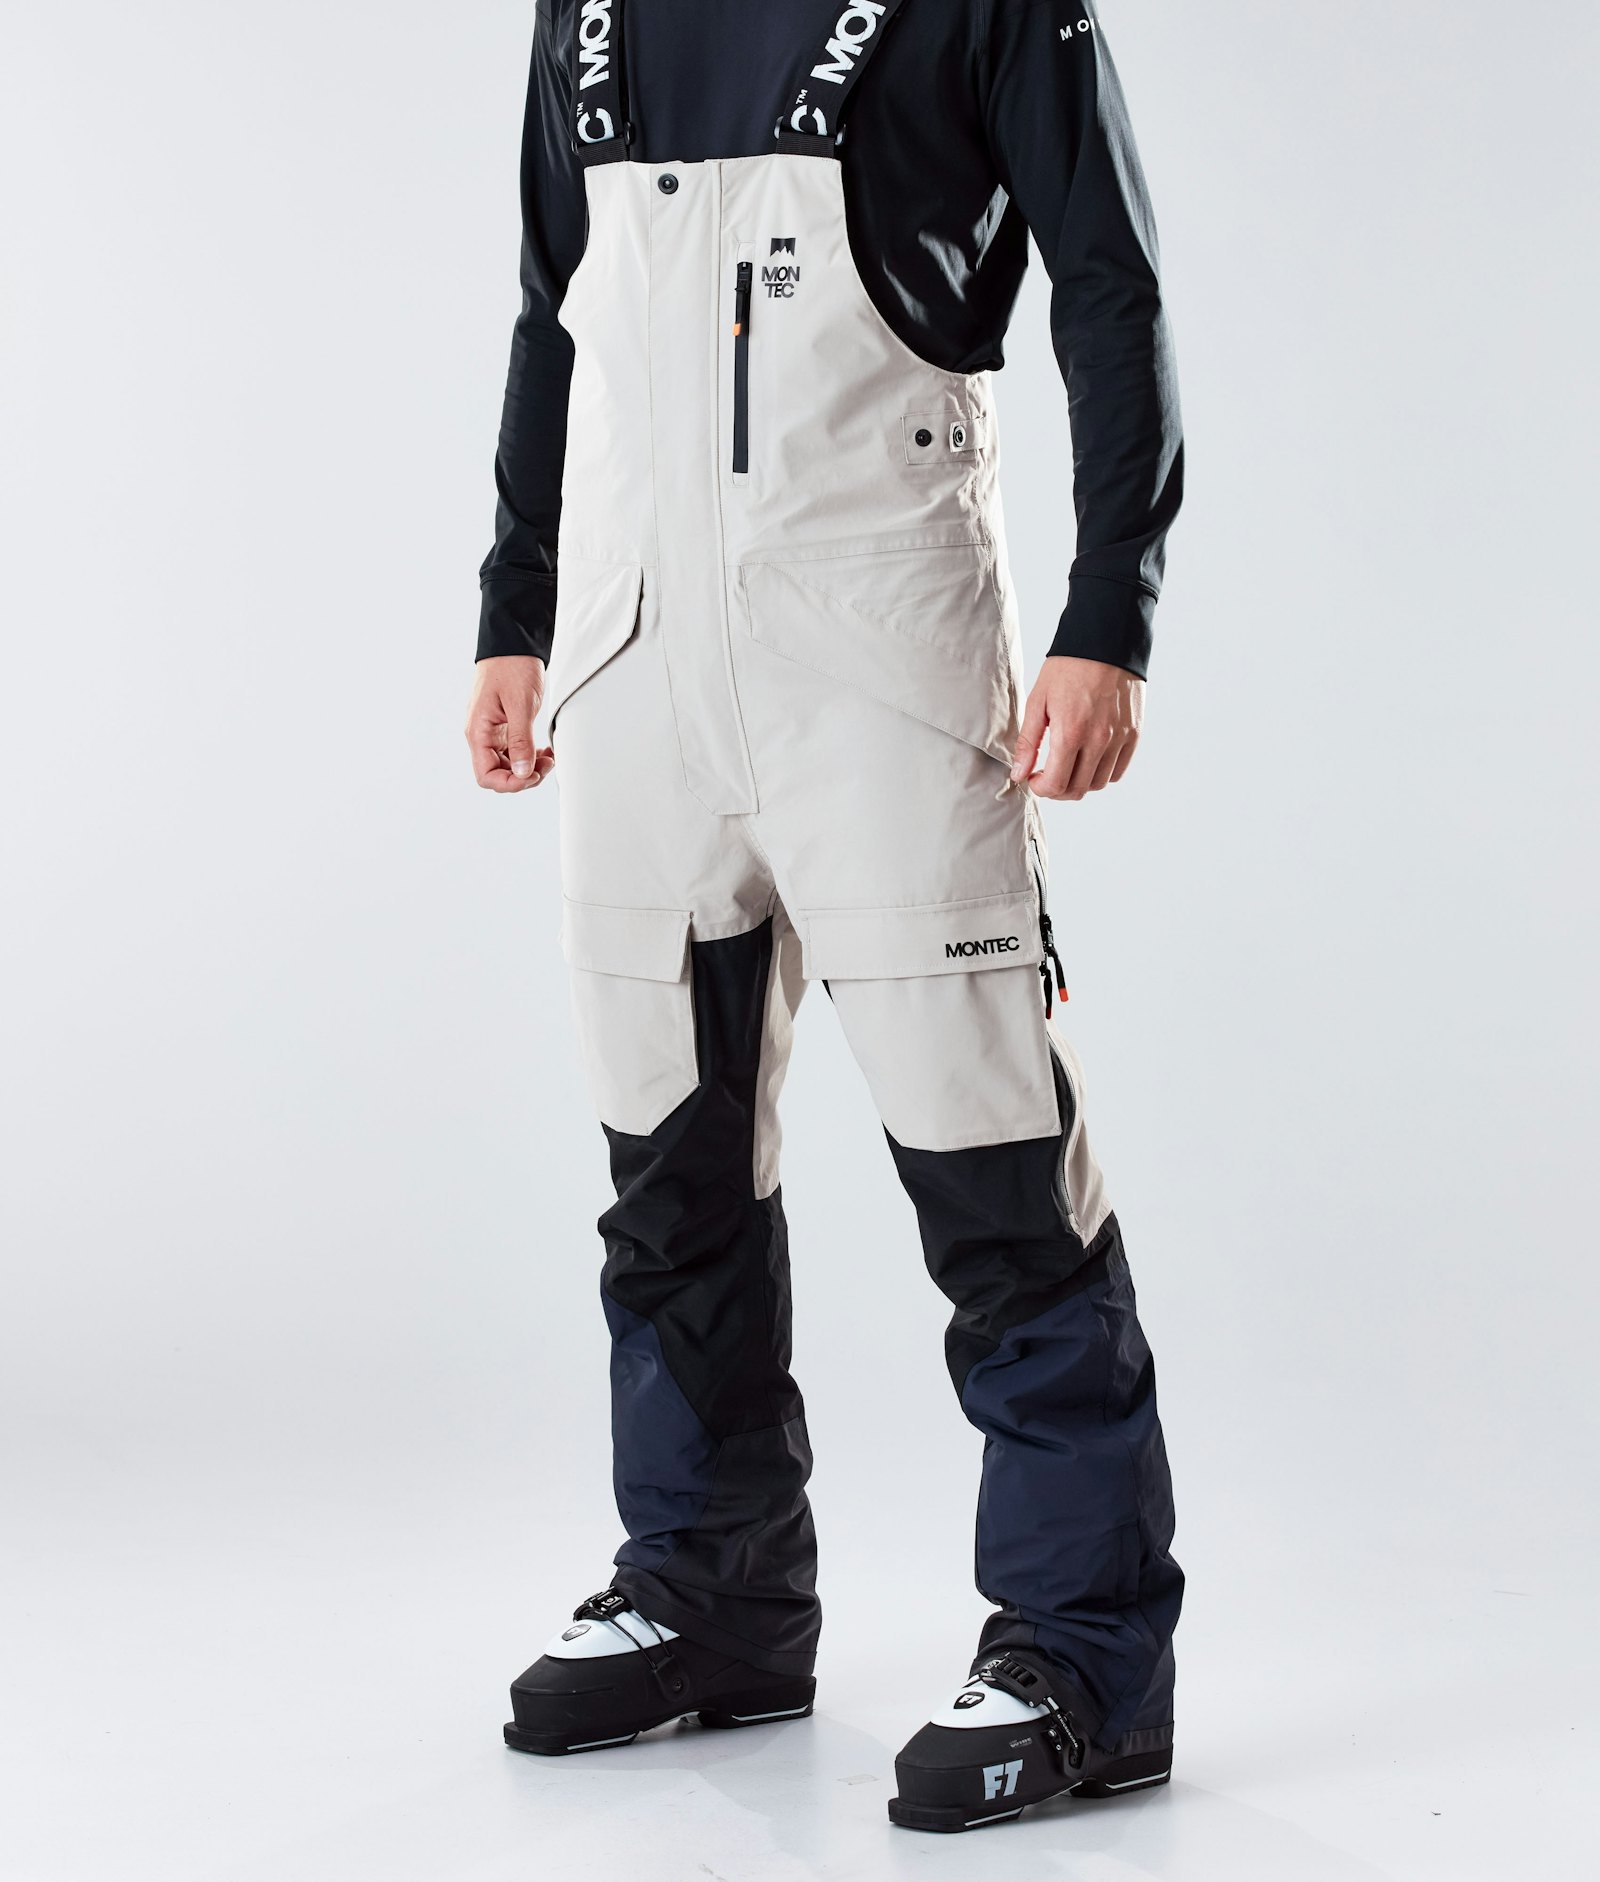 Fawk 2020 Ski Pants Men Sand/Black/Marine